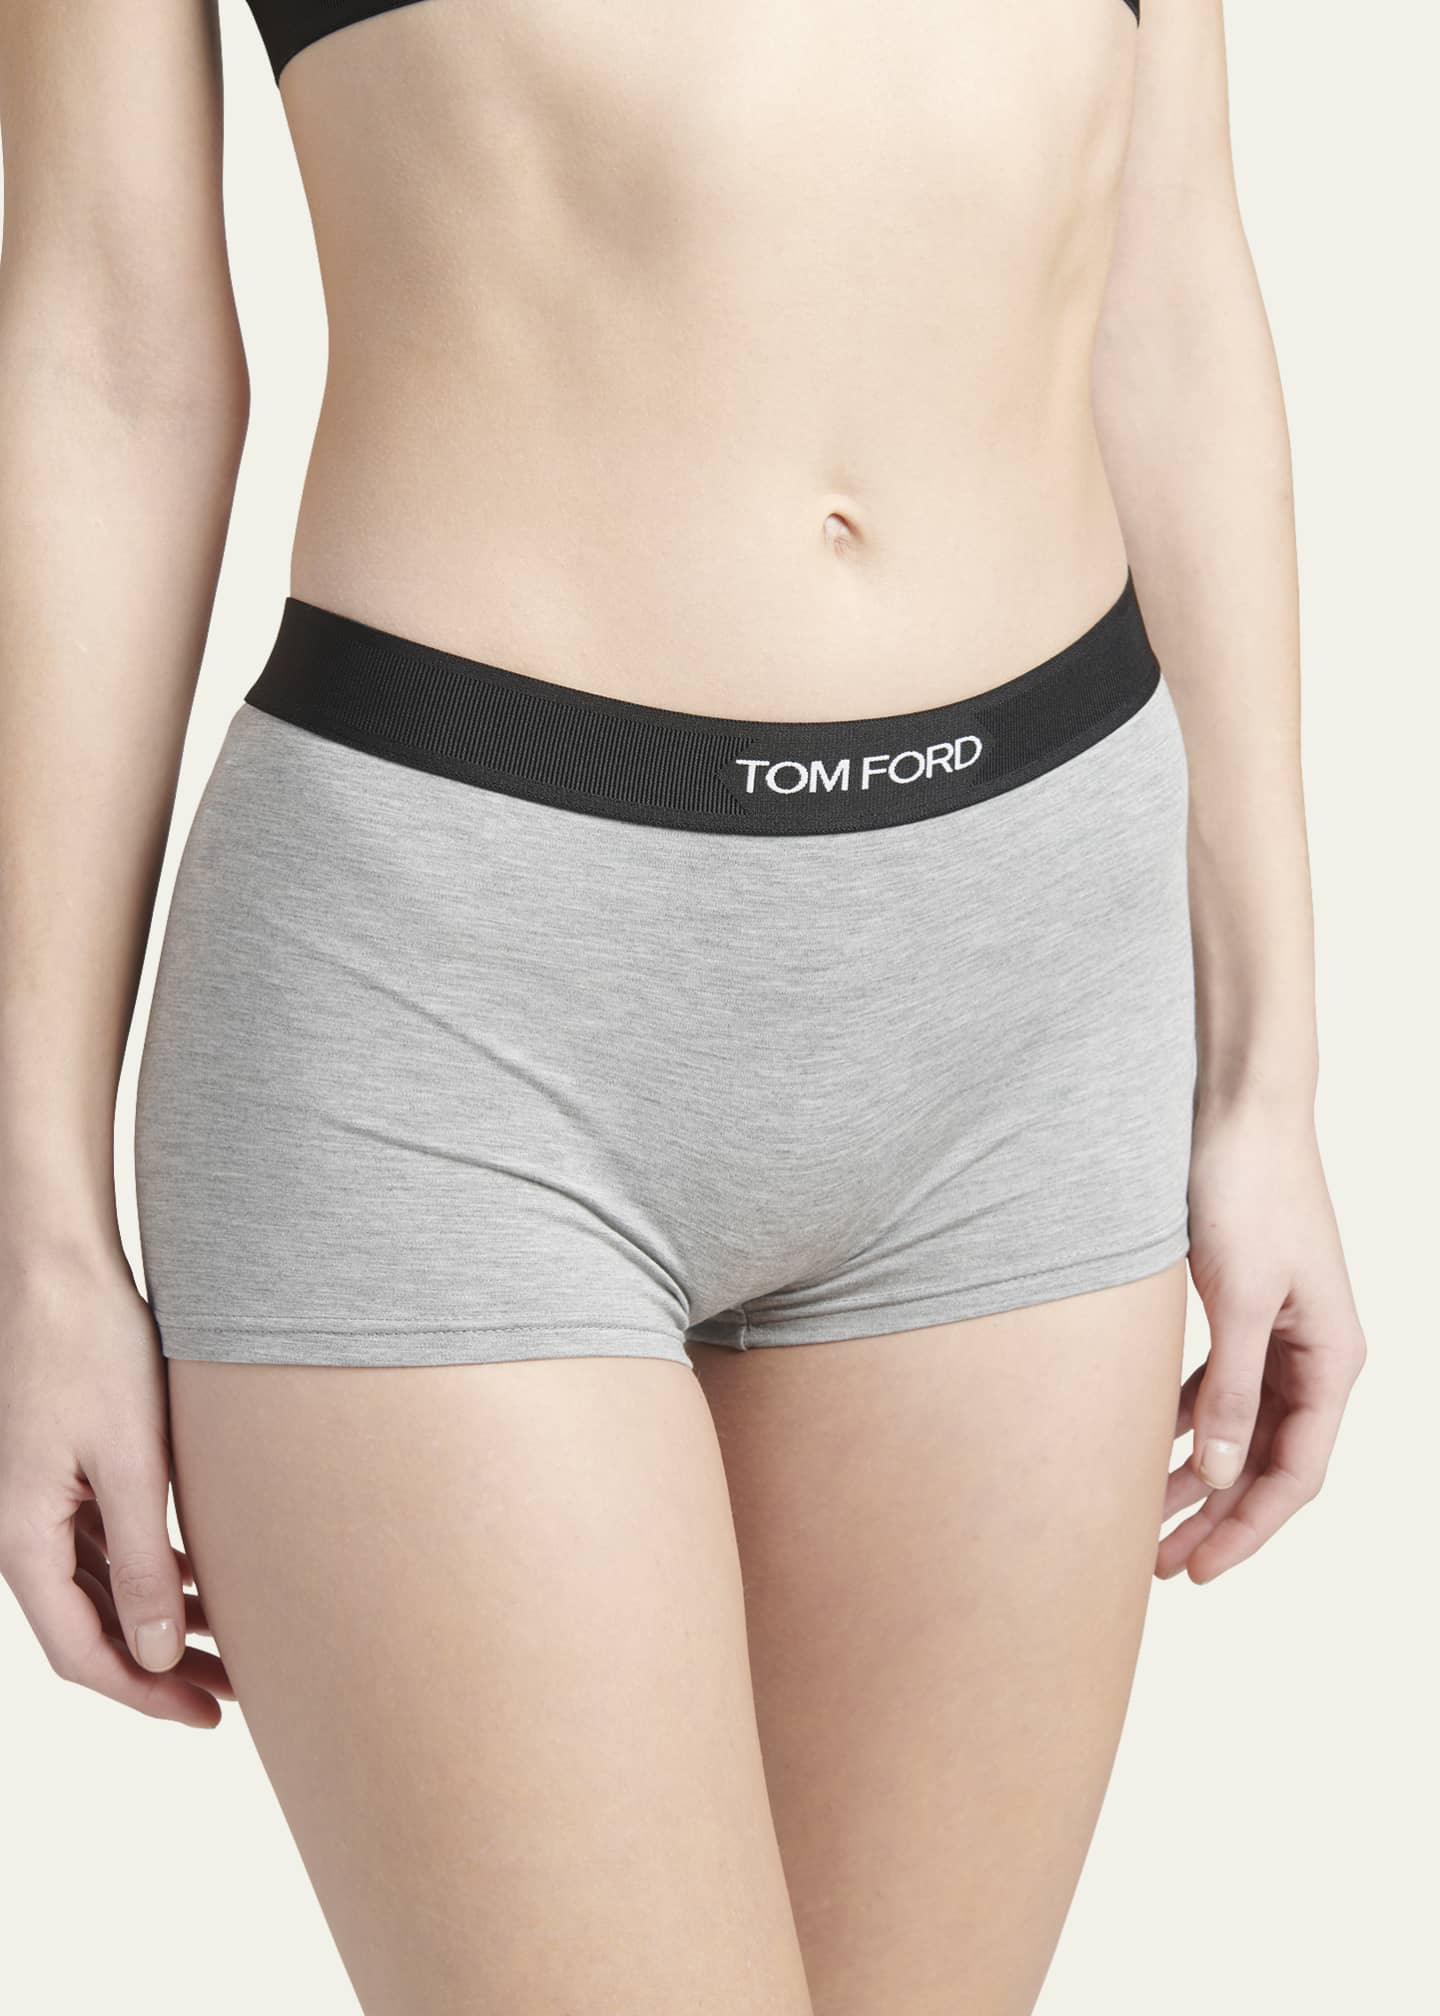 TOM FORD Logo Boyshort Underwear - Bergdorf Goodman